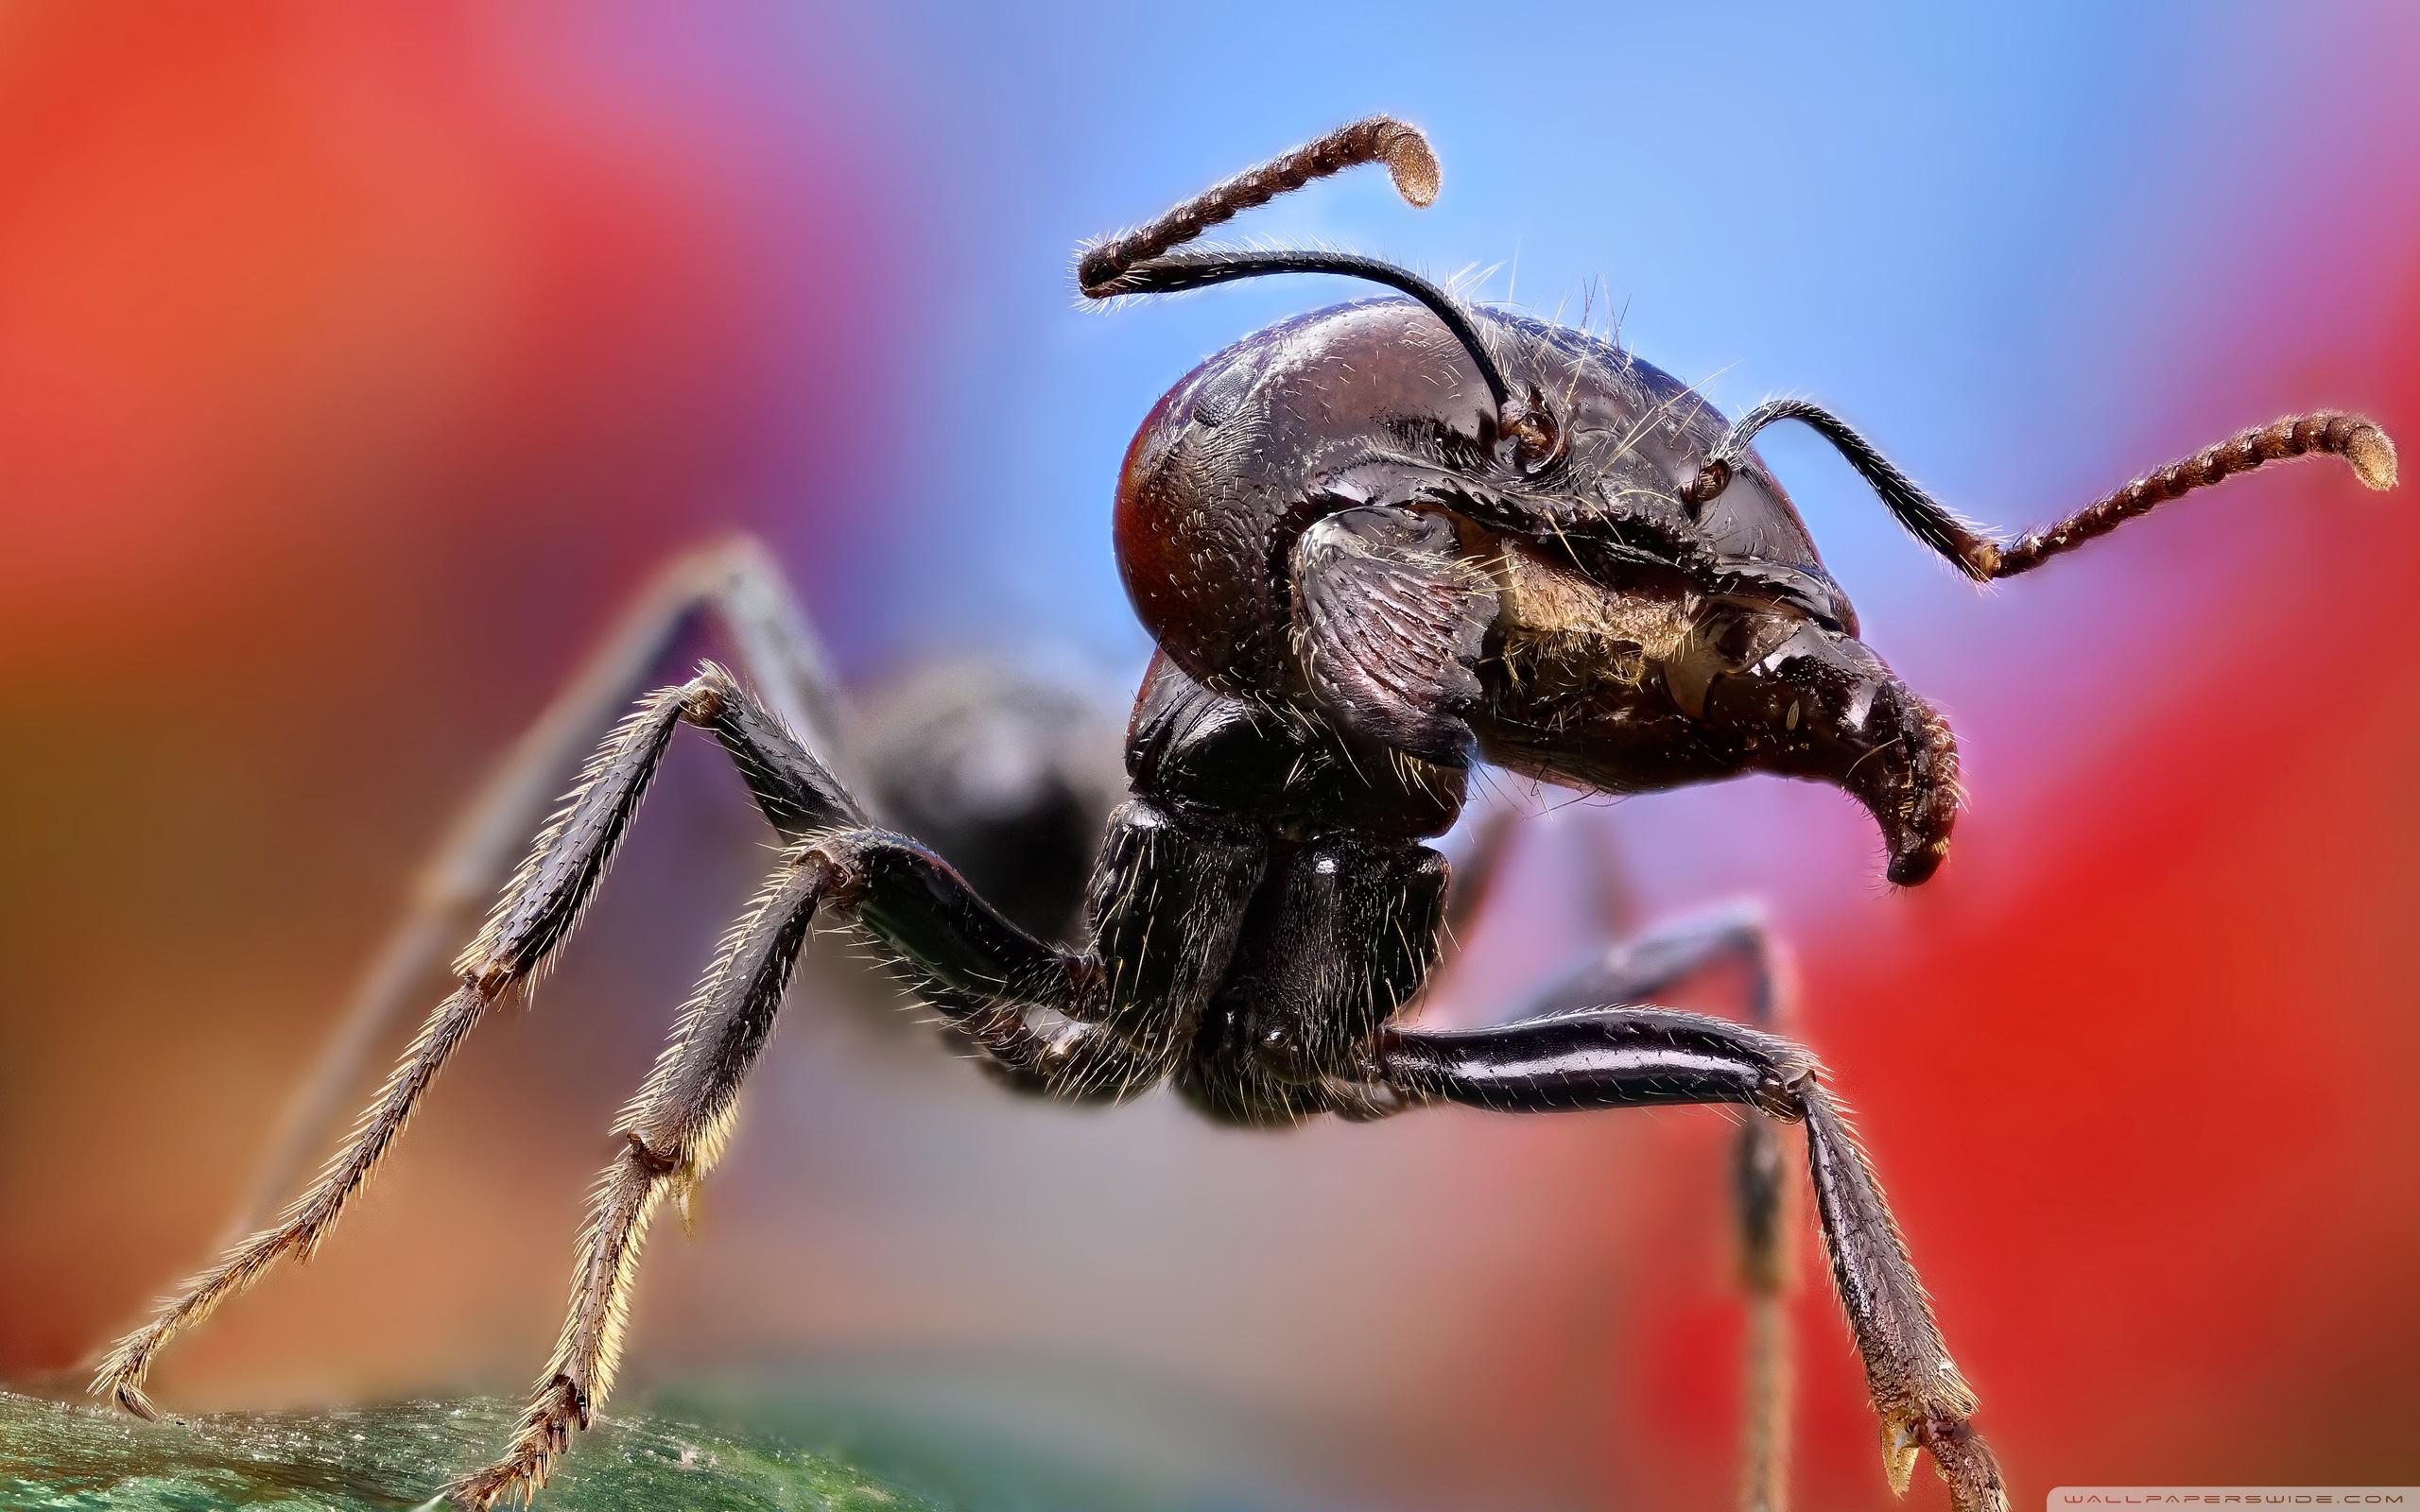 Ant Macro, HD Photography, 4k Wallpaper, Image